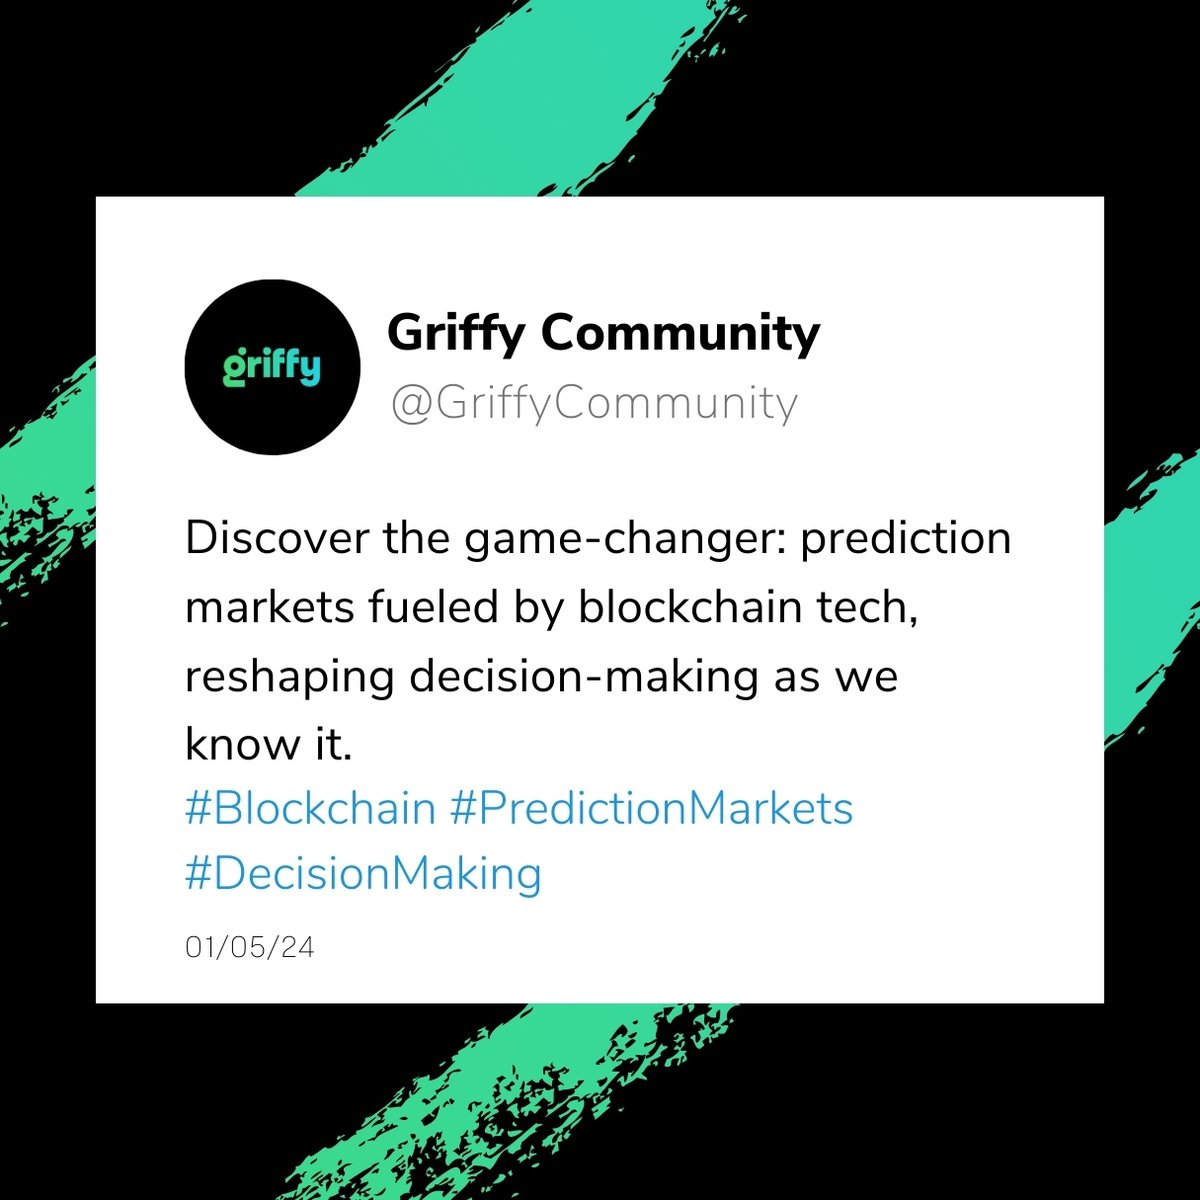 #Blockchain #PredictionMarkets
#DecisionMaking